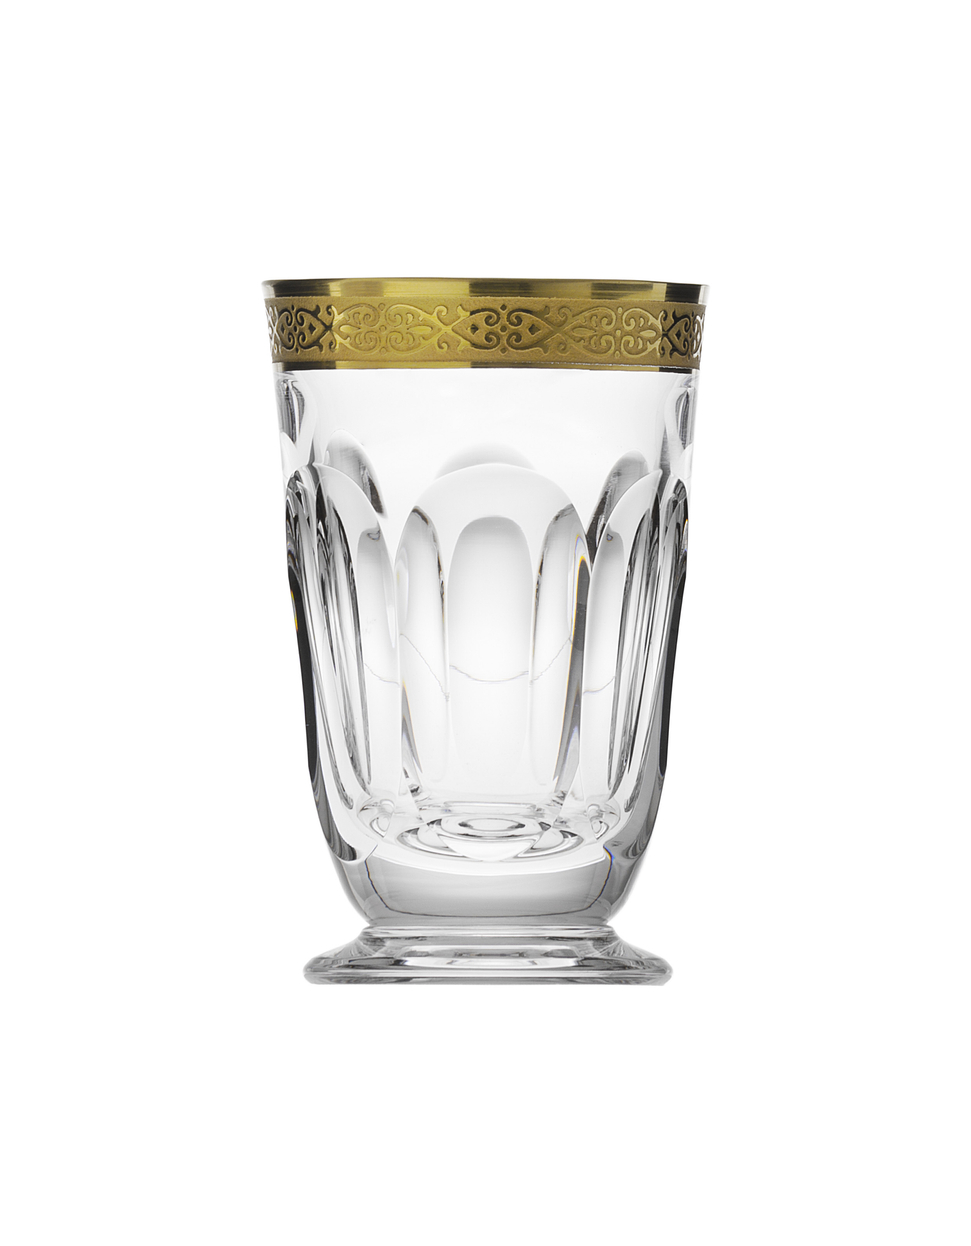 Lady Hamilton spirit glass, 45 ml